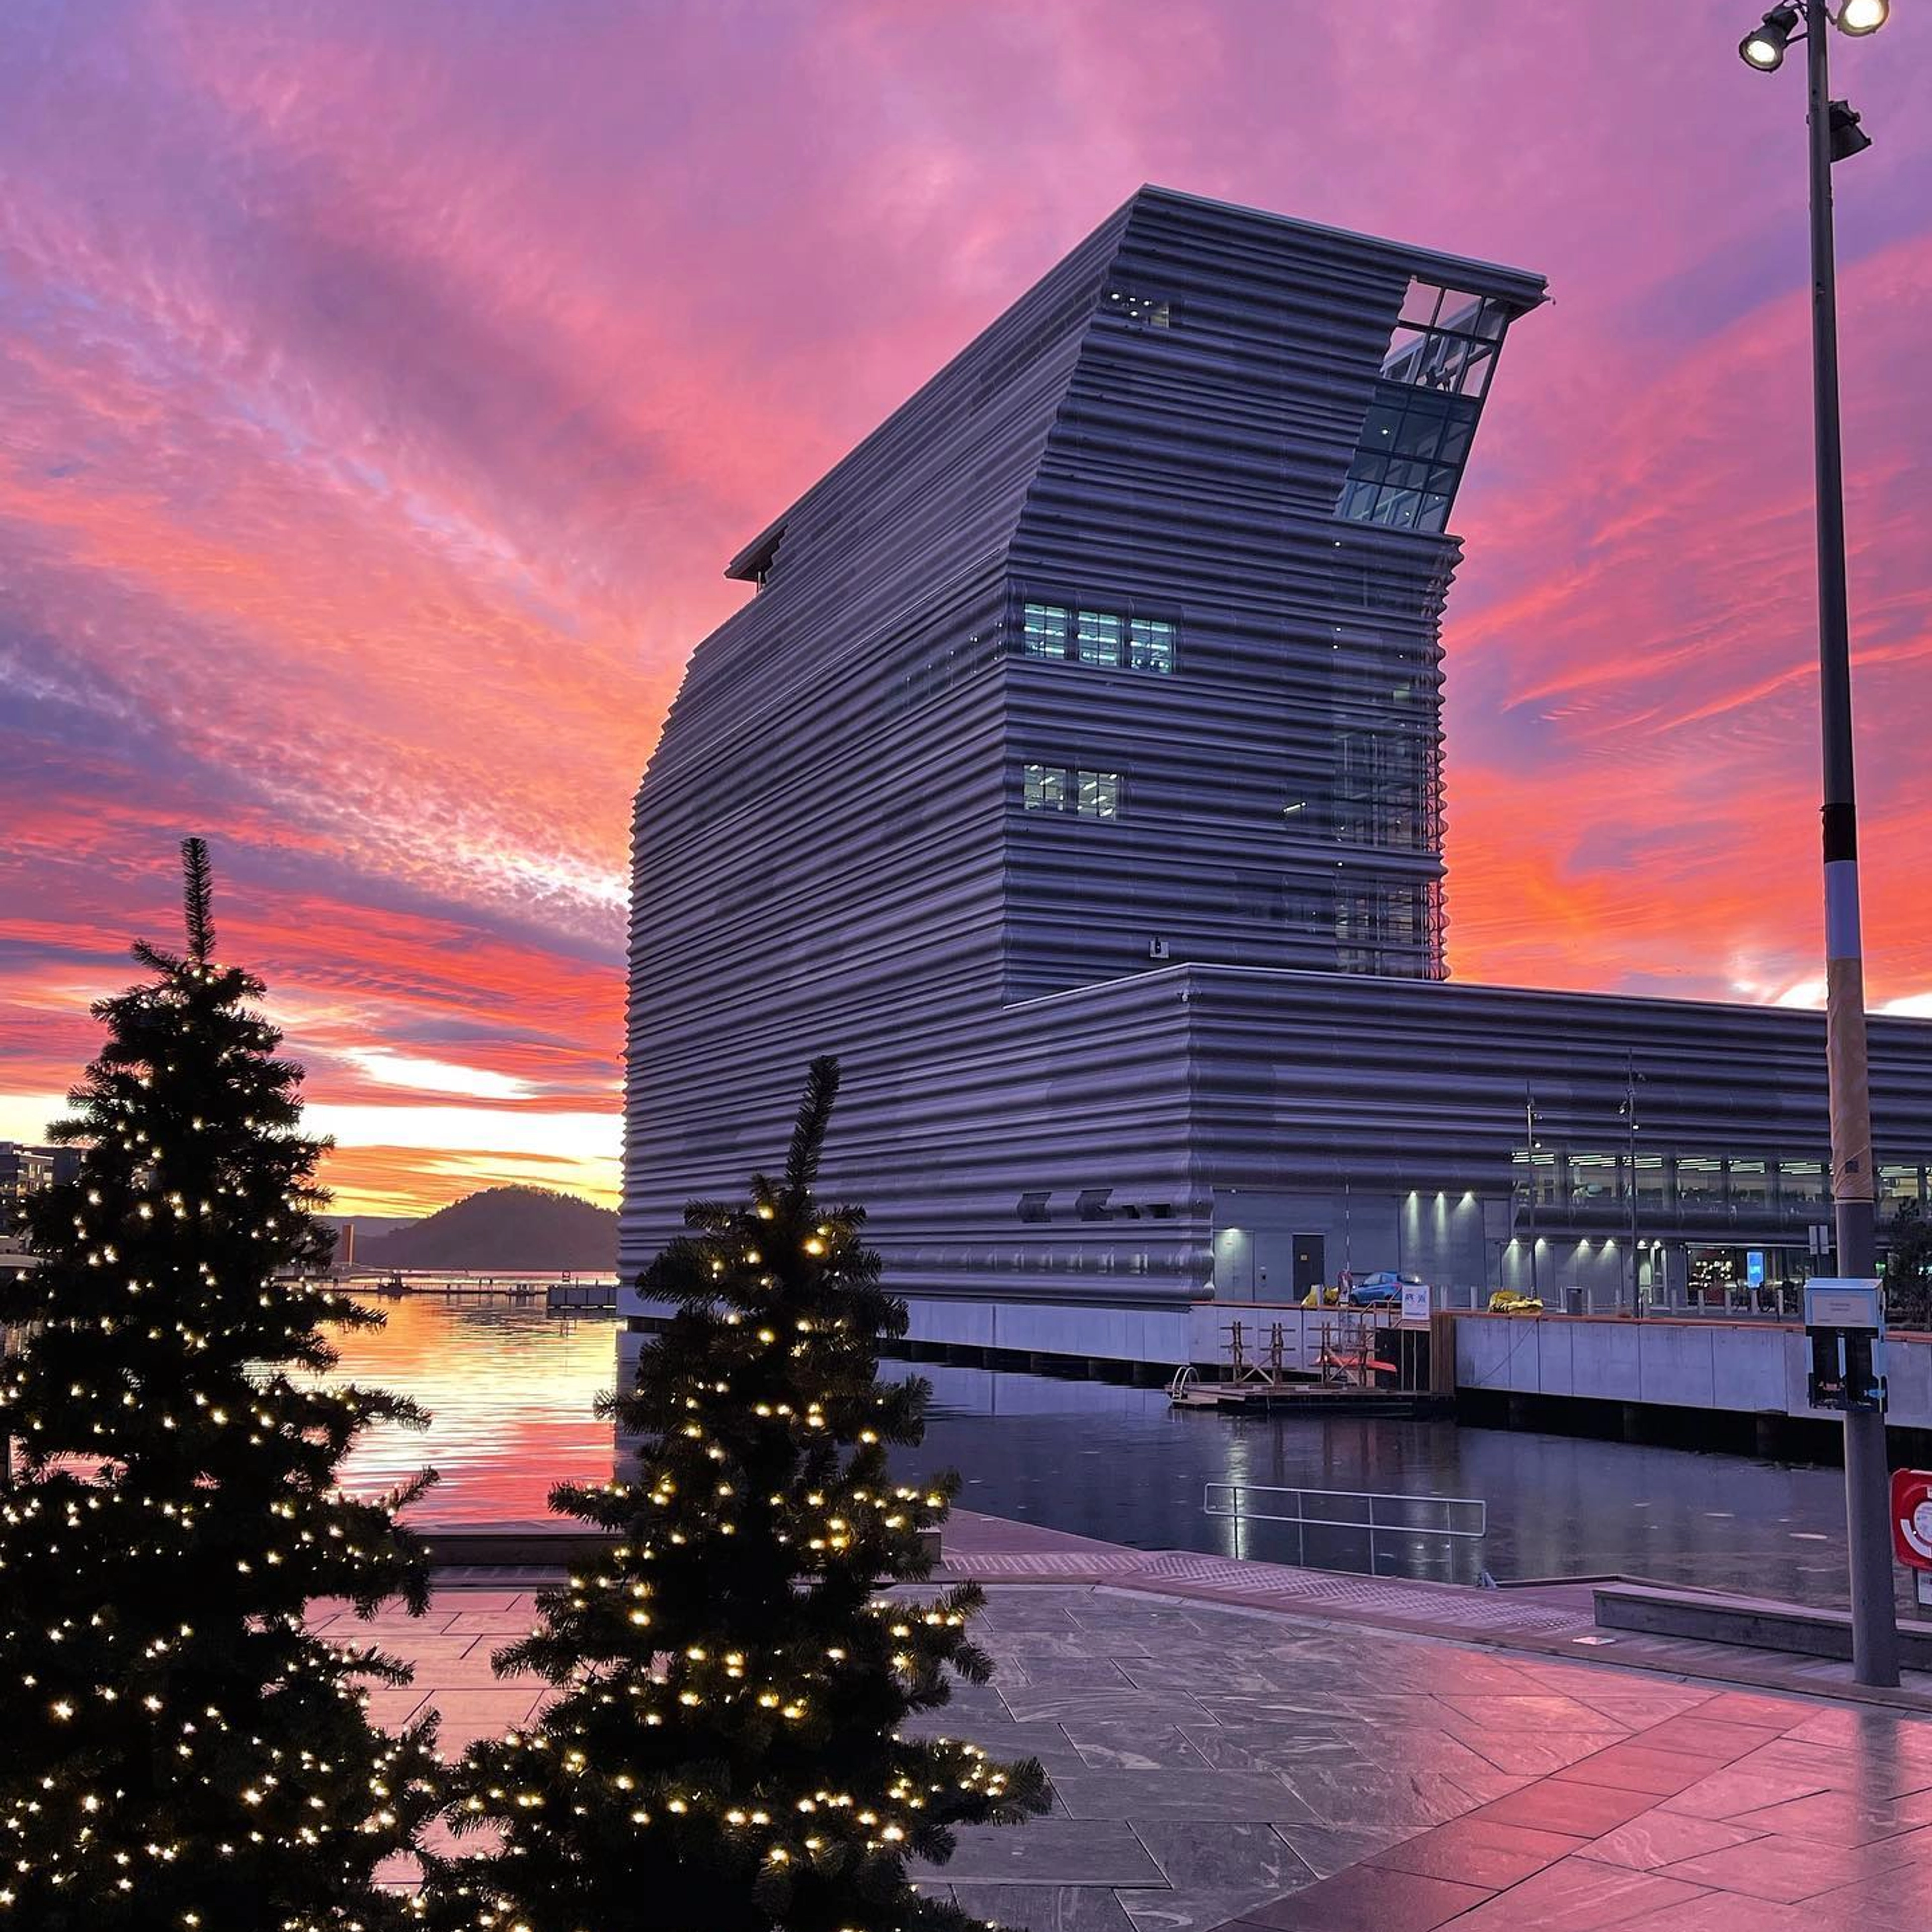 Munchmuseet i solnedgang - Oslo